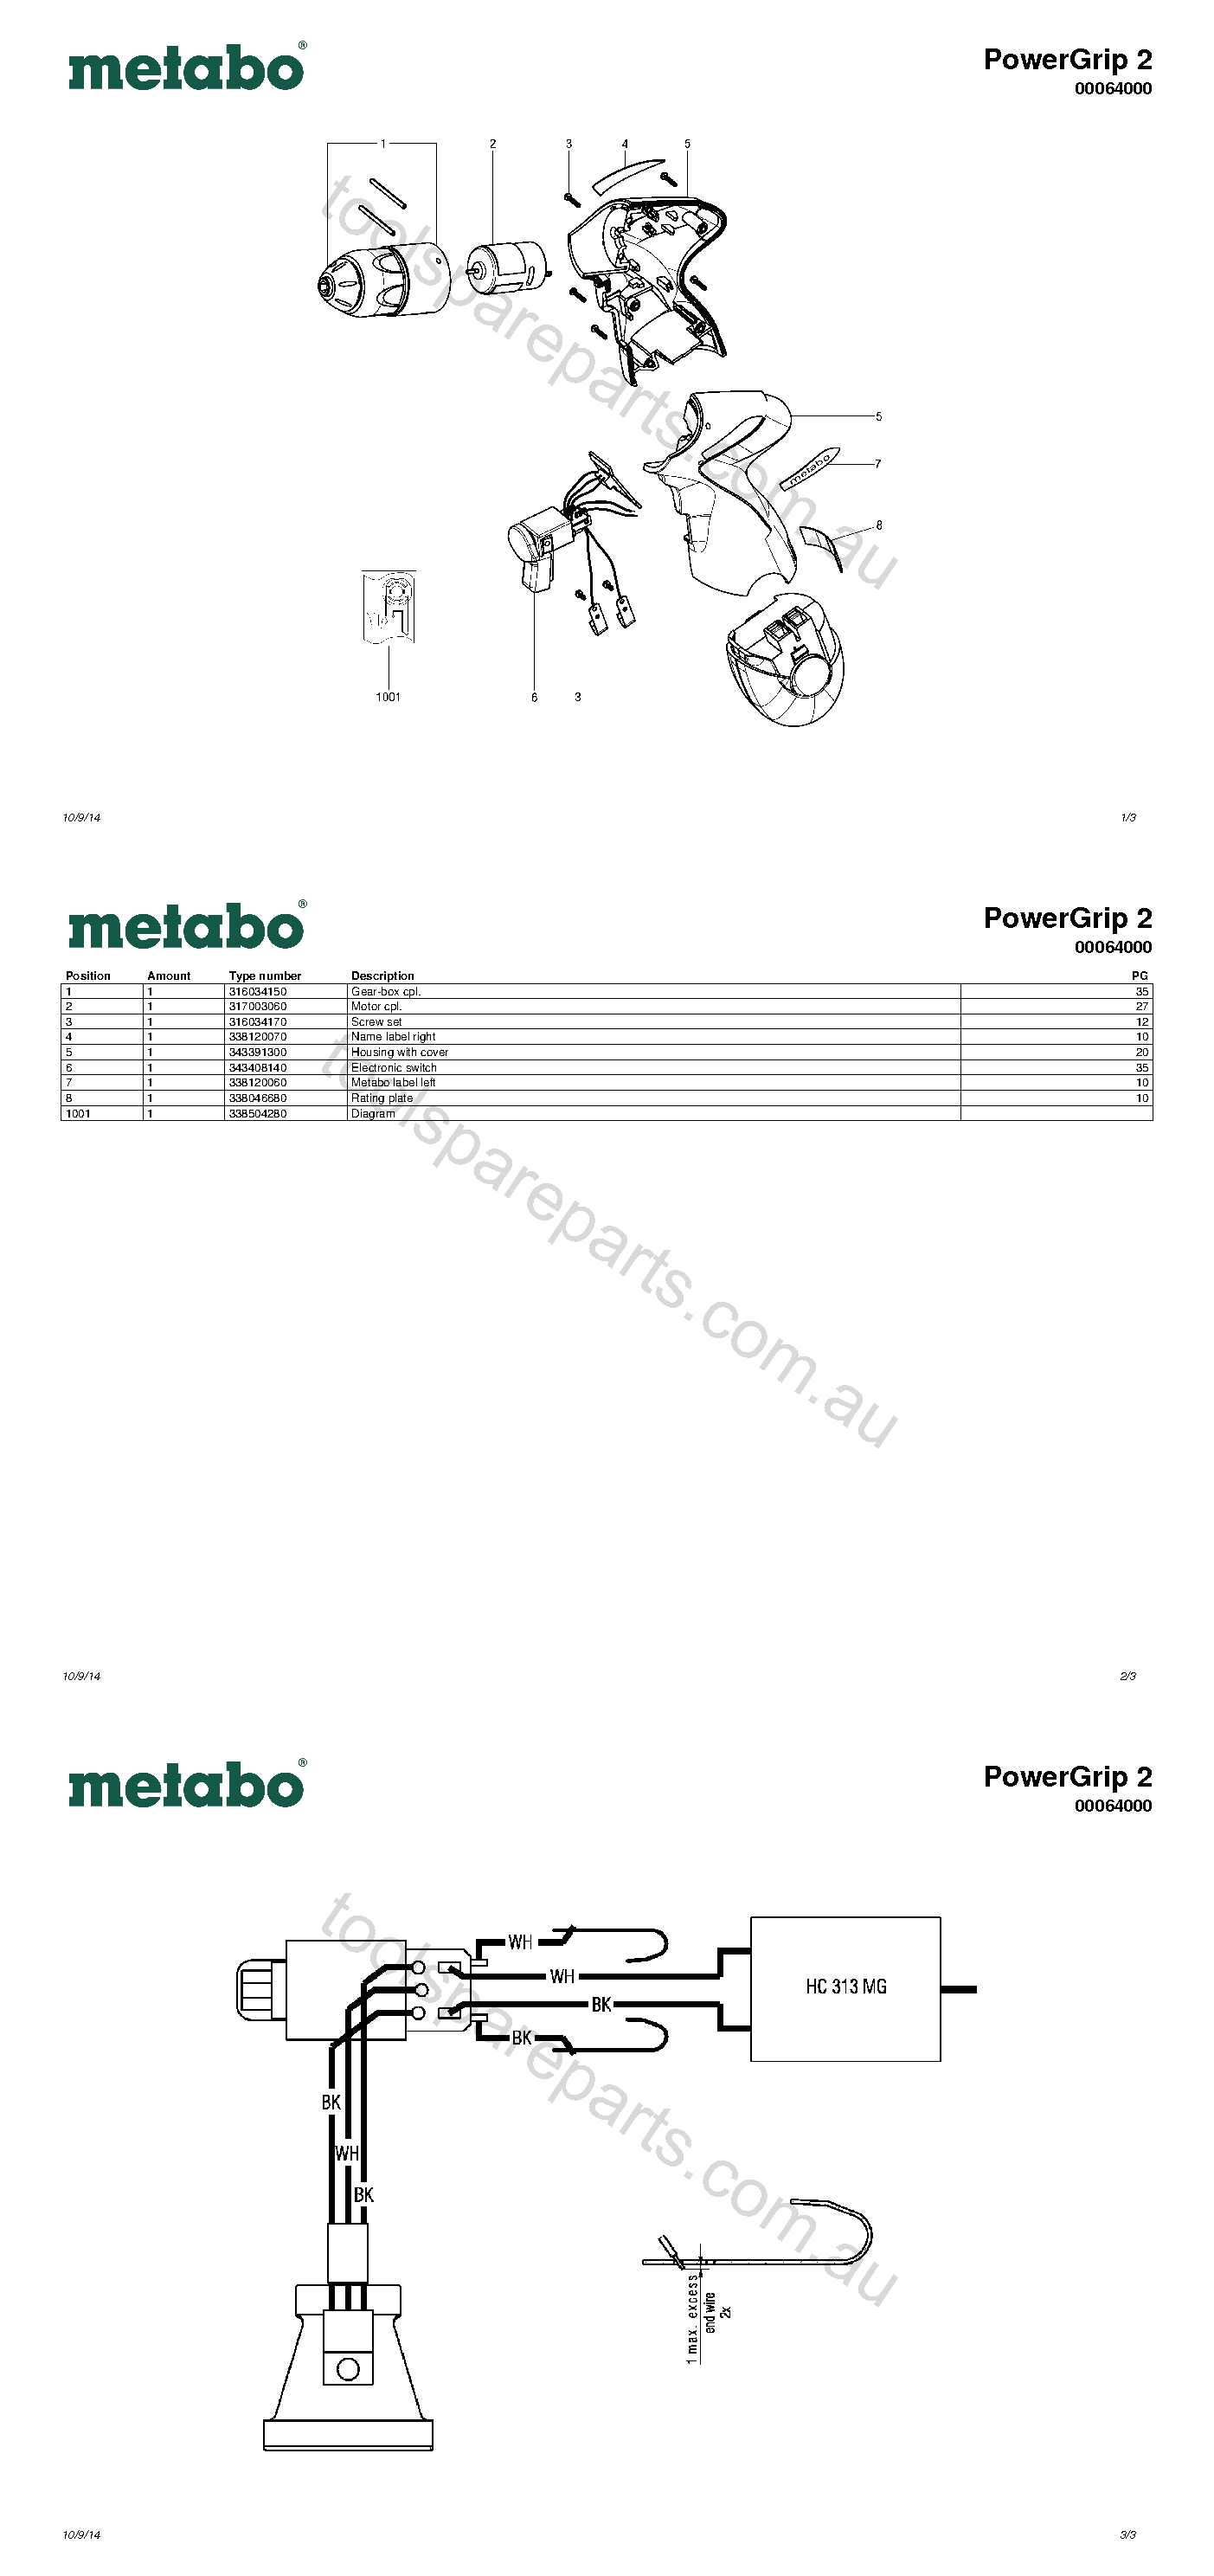 Metabo PowerGrip 2 00064000  Diagram 1